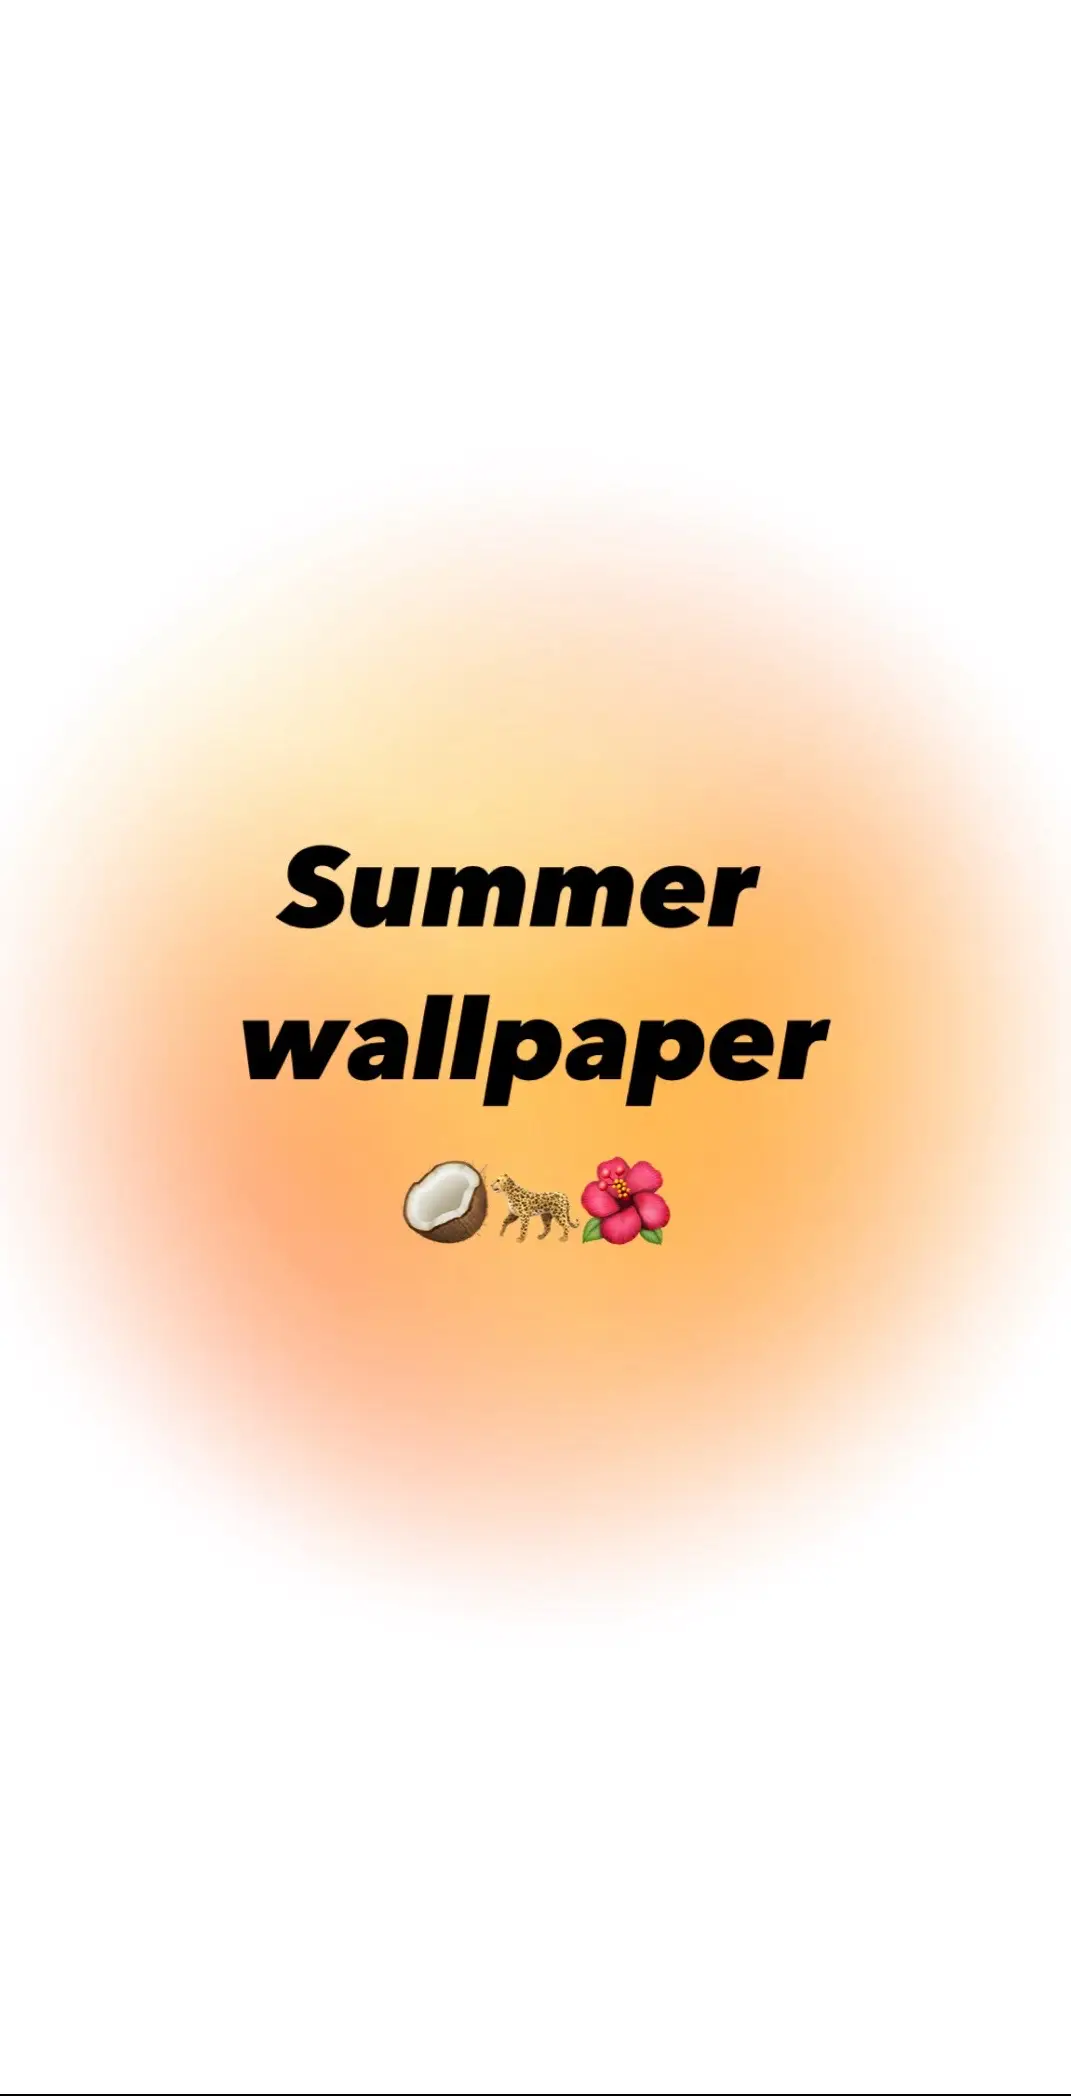 #Summer #wallpaper #summerwallpaper #aestarste 